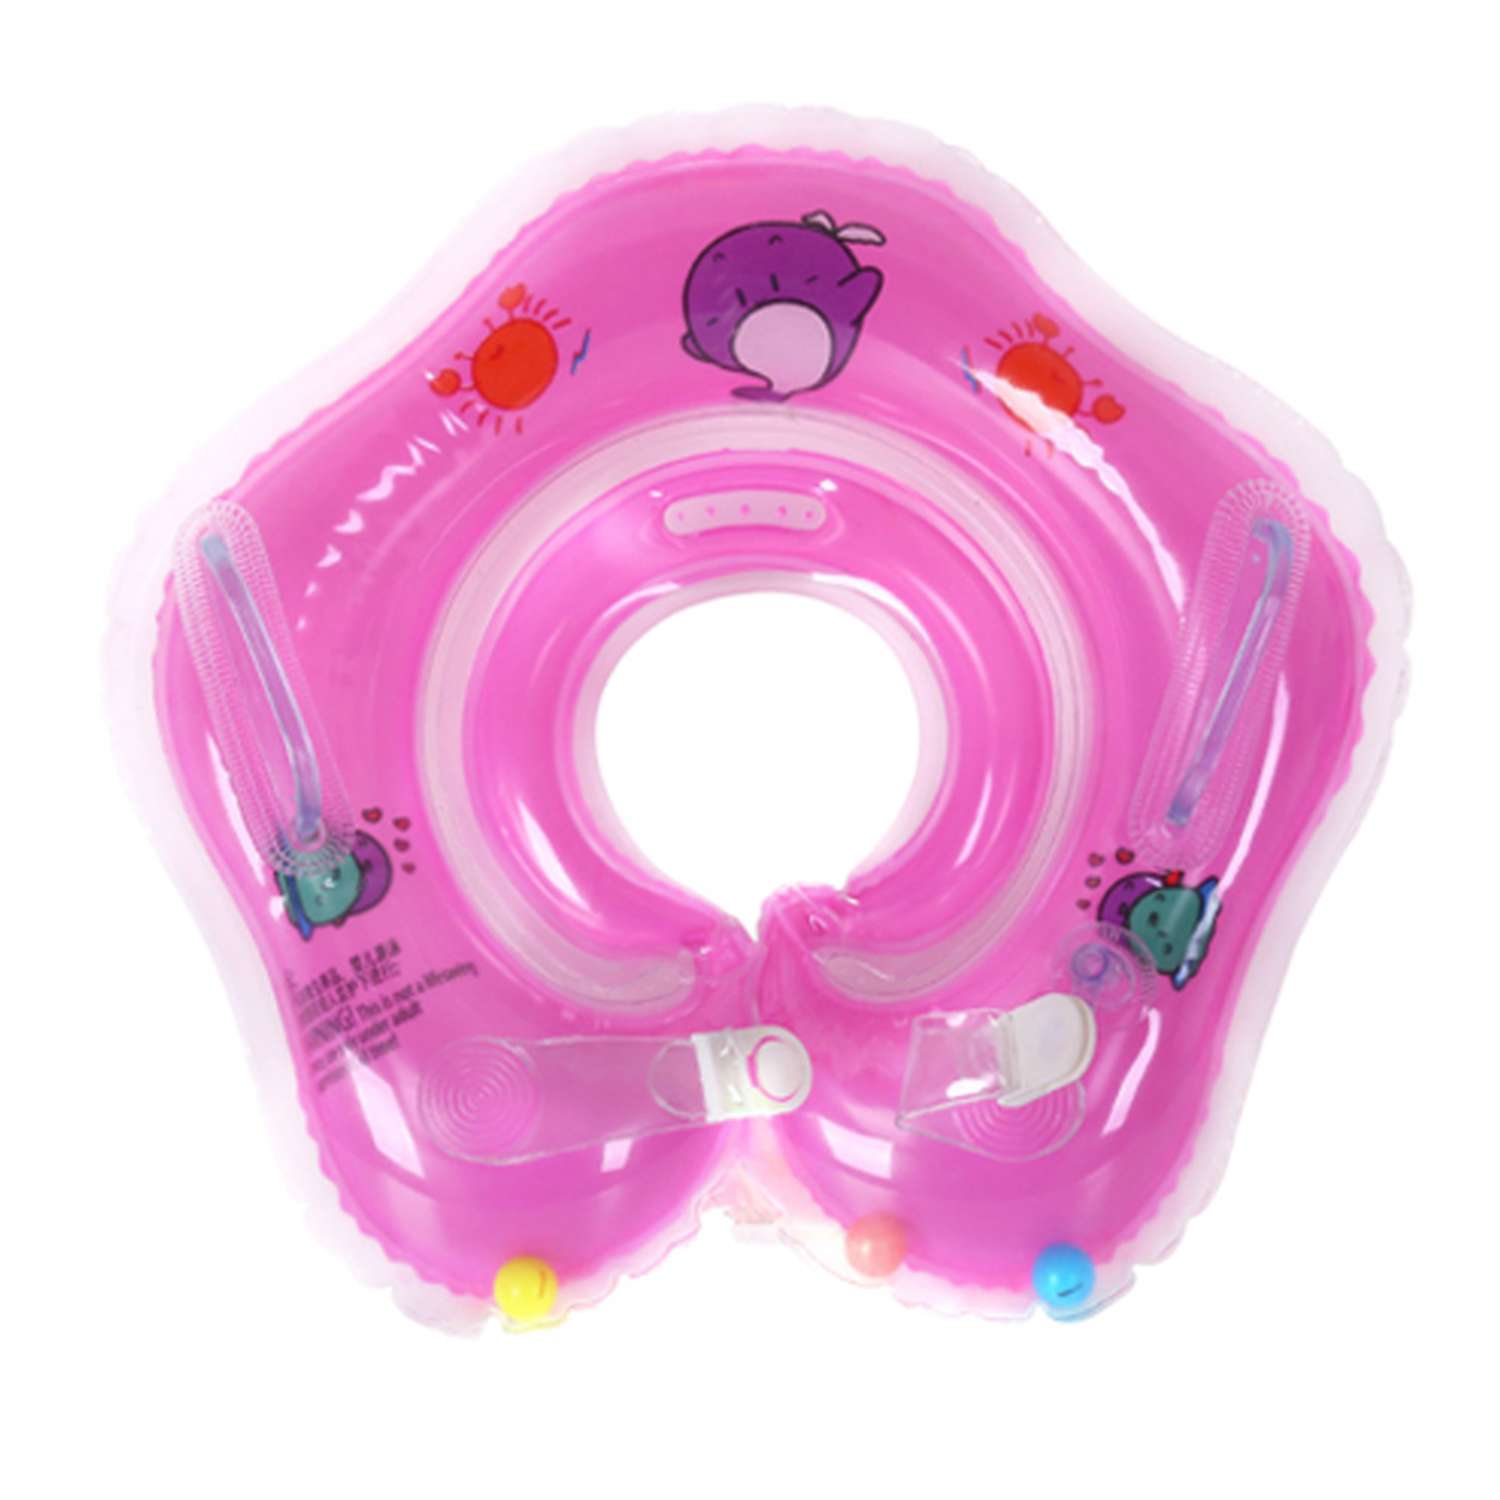 Надувной круг на шею SHARKTOYS для купания младенцев - фото 1